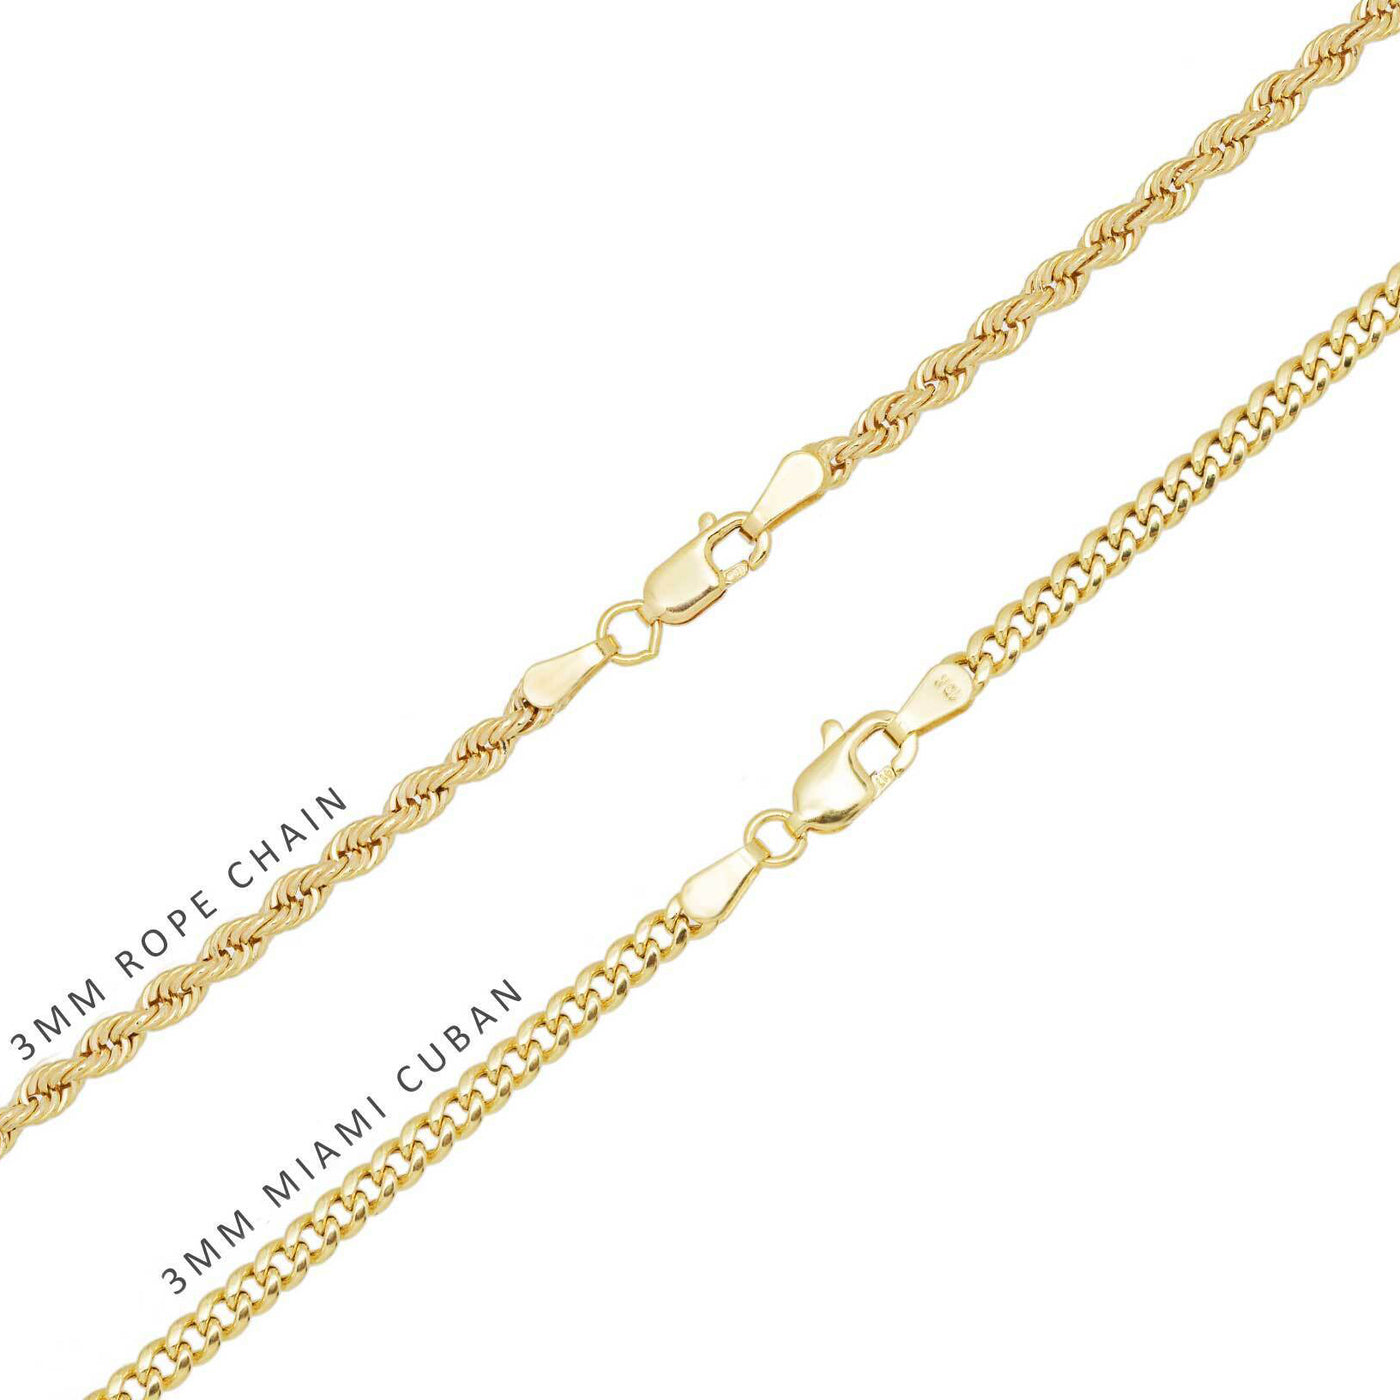 2" Men's Roaring Lion Head CZ Ruby Eyes Pendant & Chain Necklace Set 10K Yellow White Gold